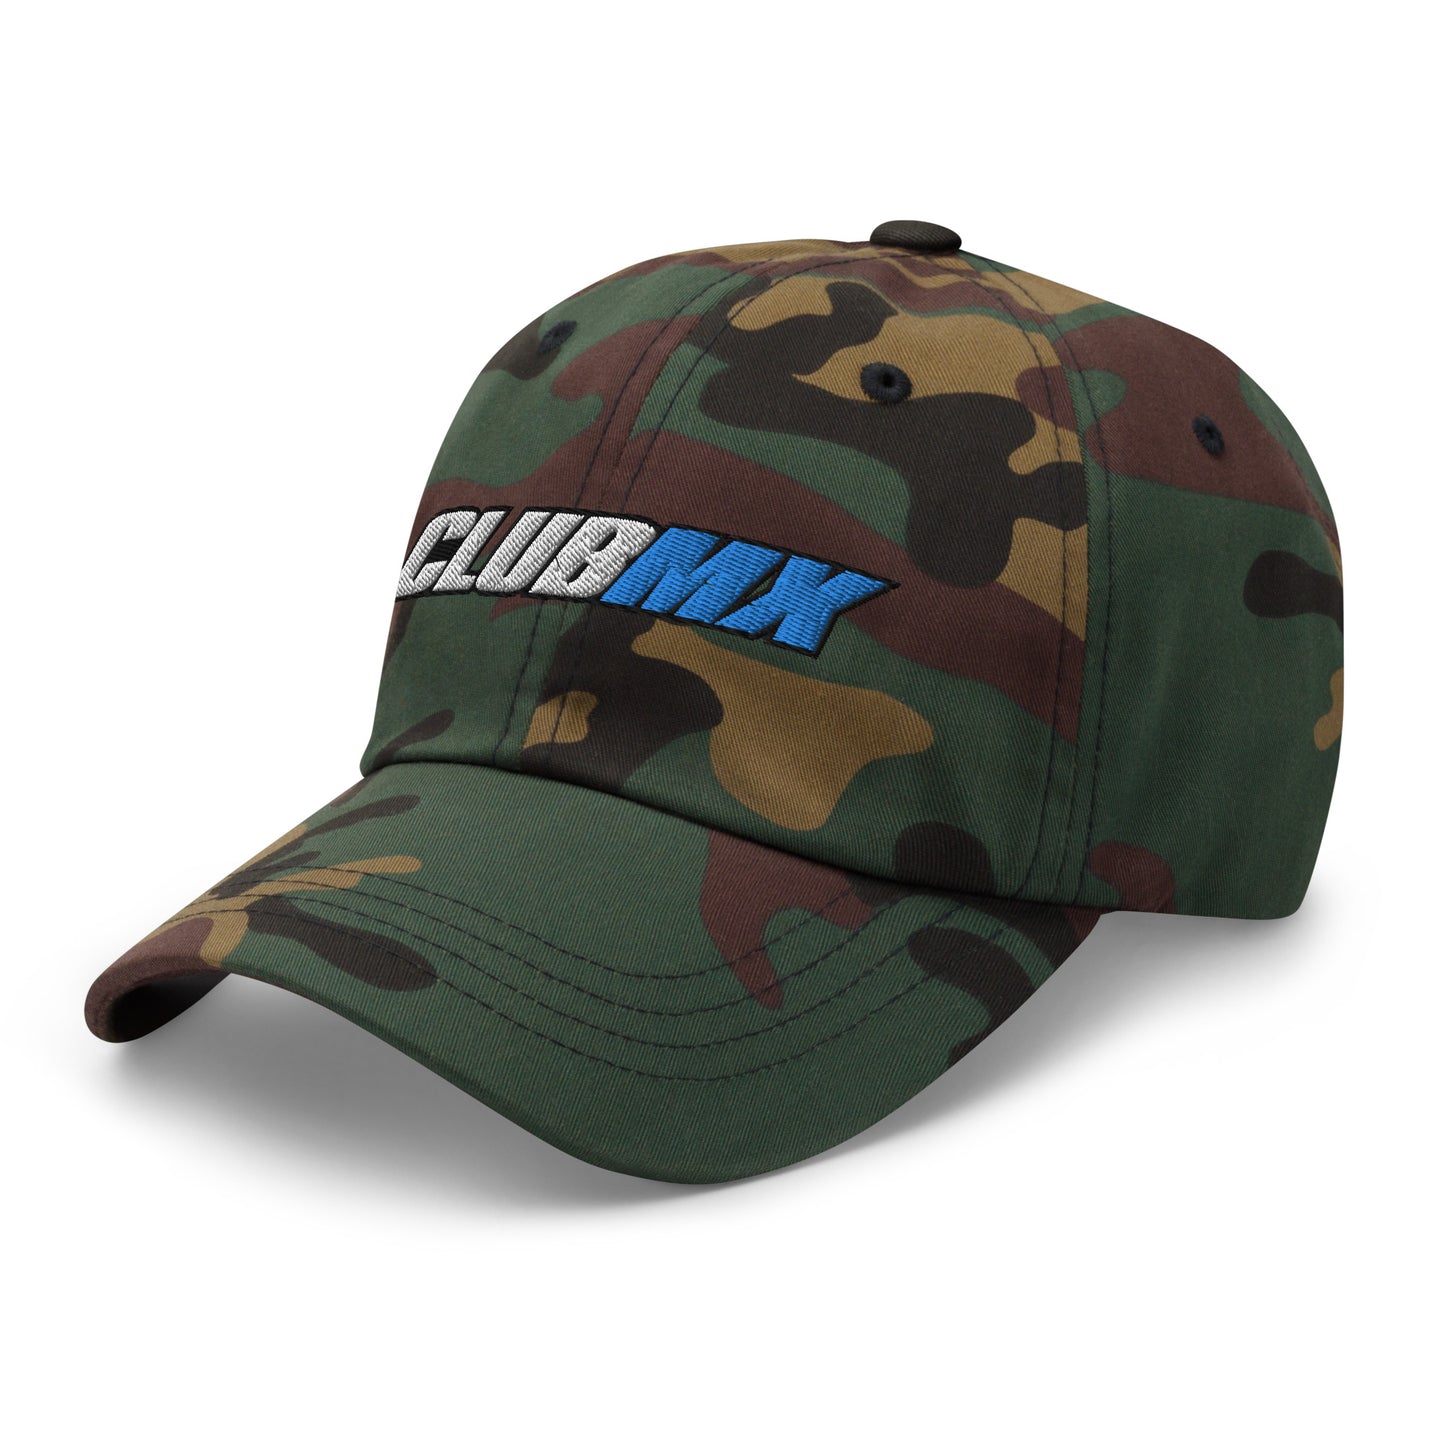 ClubMX "Dad Hat"